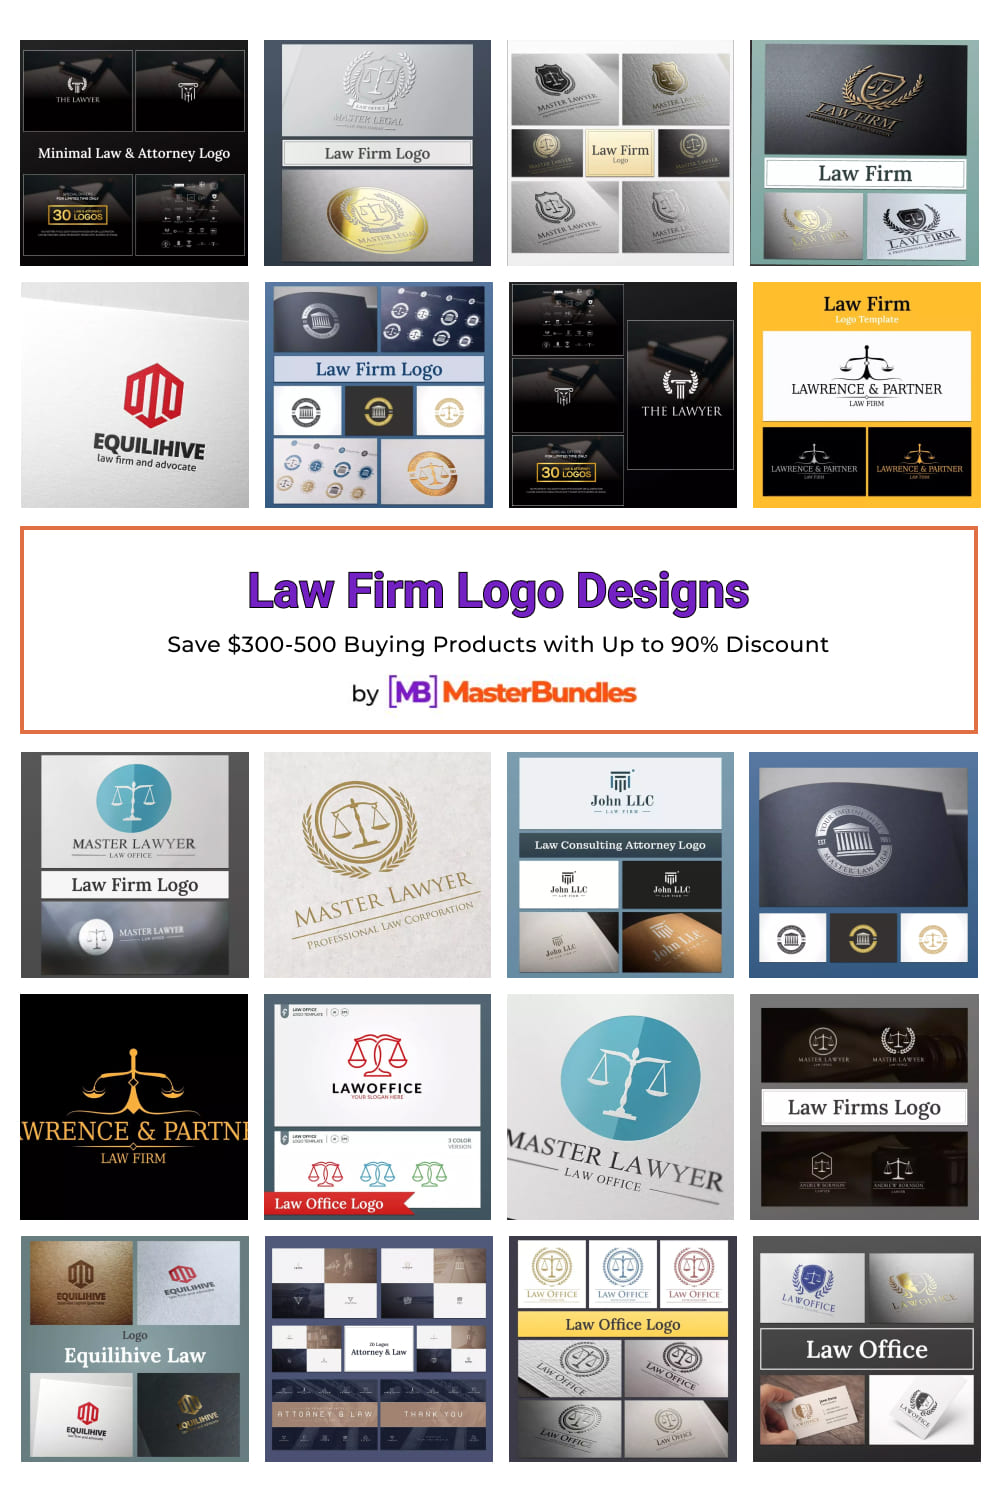 Law Firm Logo Designs for Pinterest.